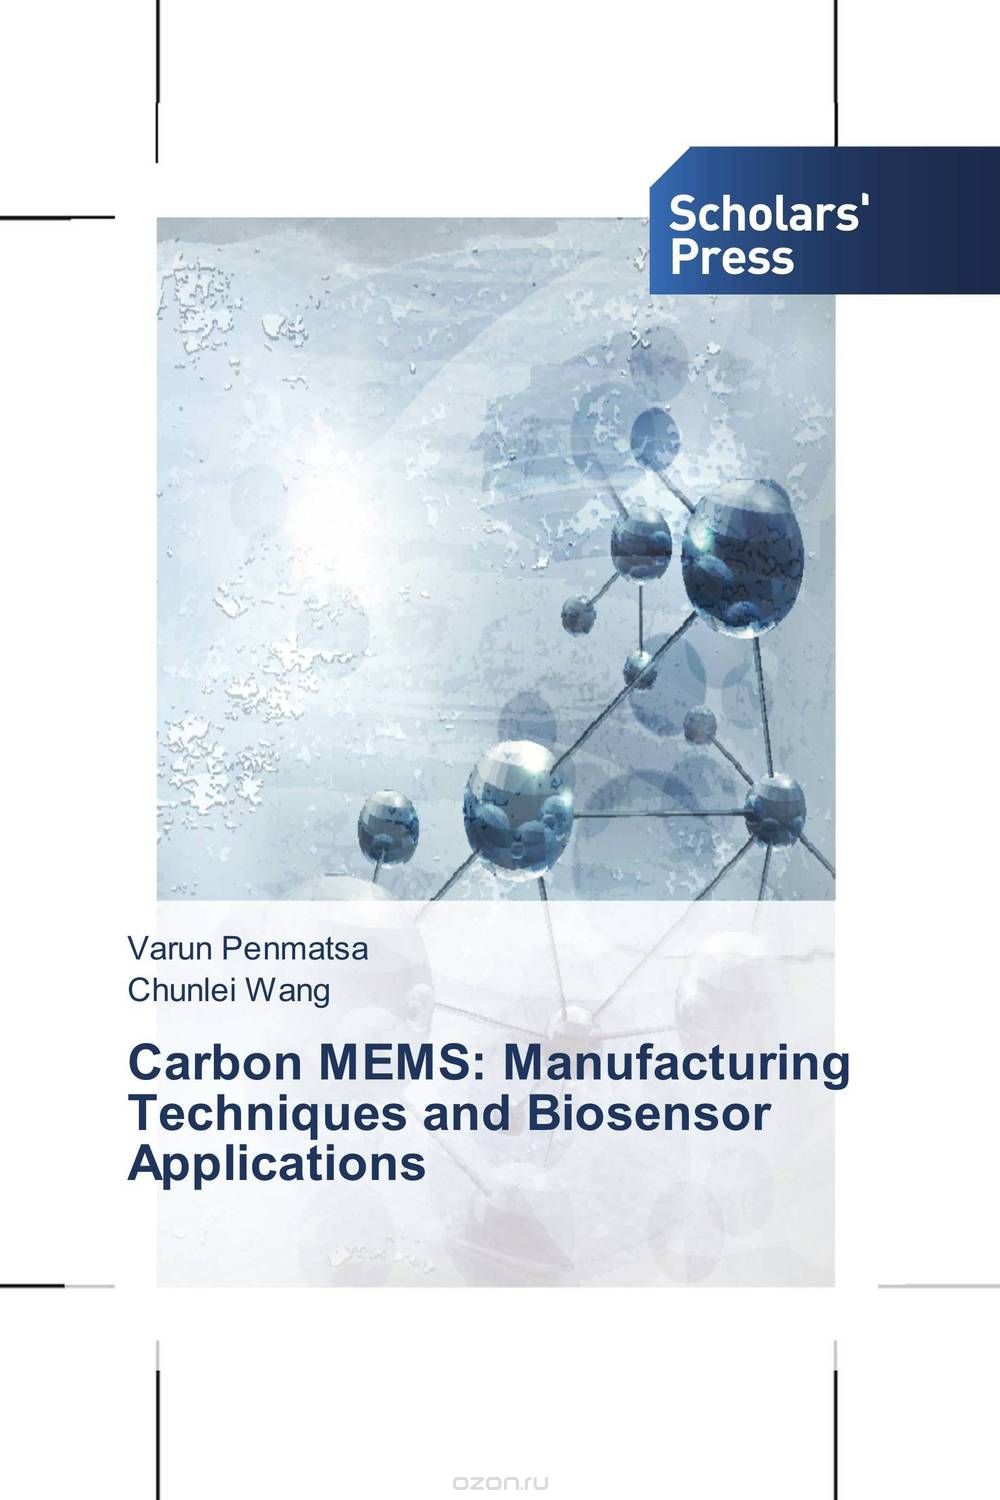 Скачать книгу "Carbon MEMS: Manufacturing Techniques and Biosensor Applications"